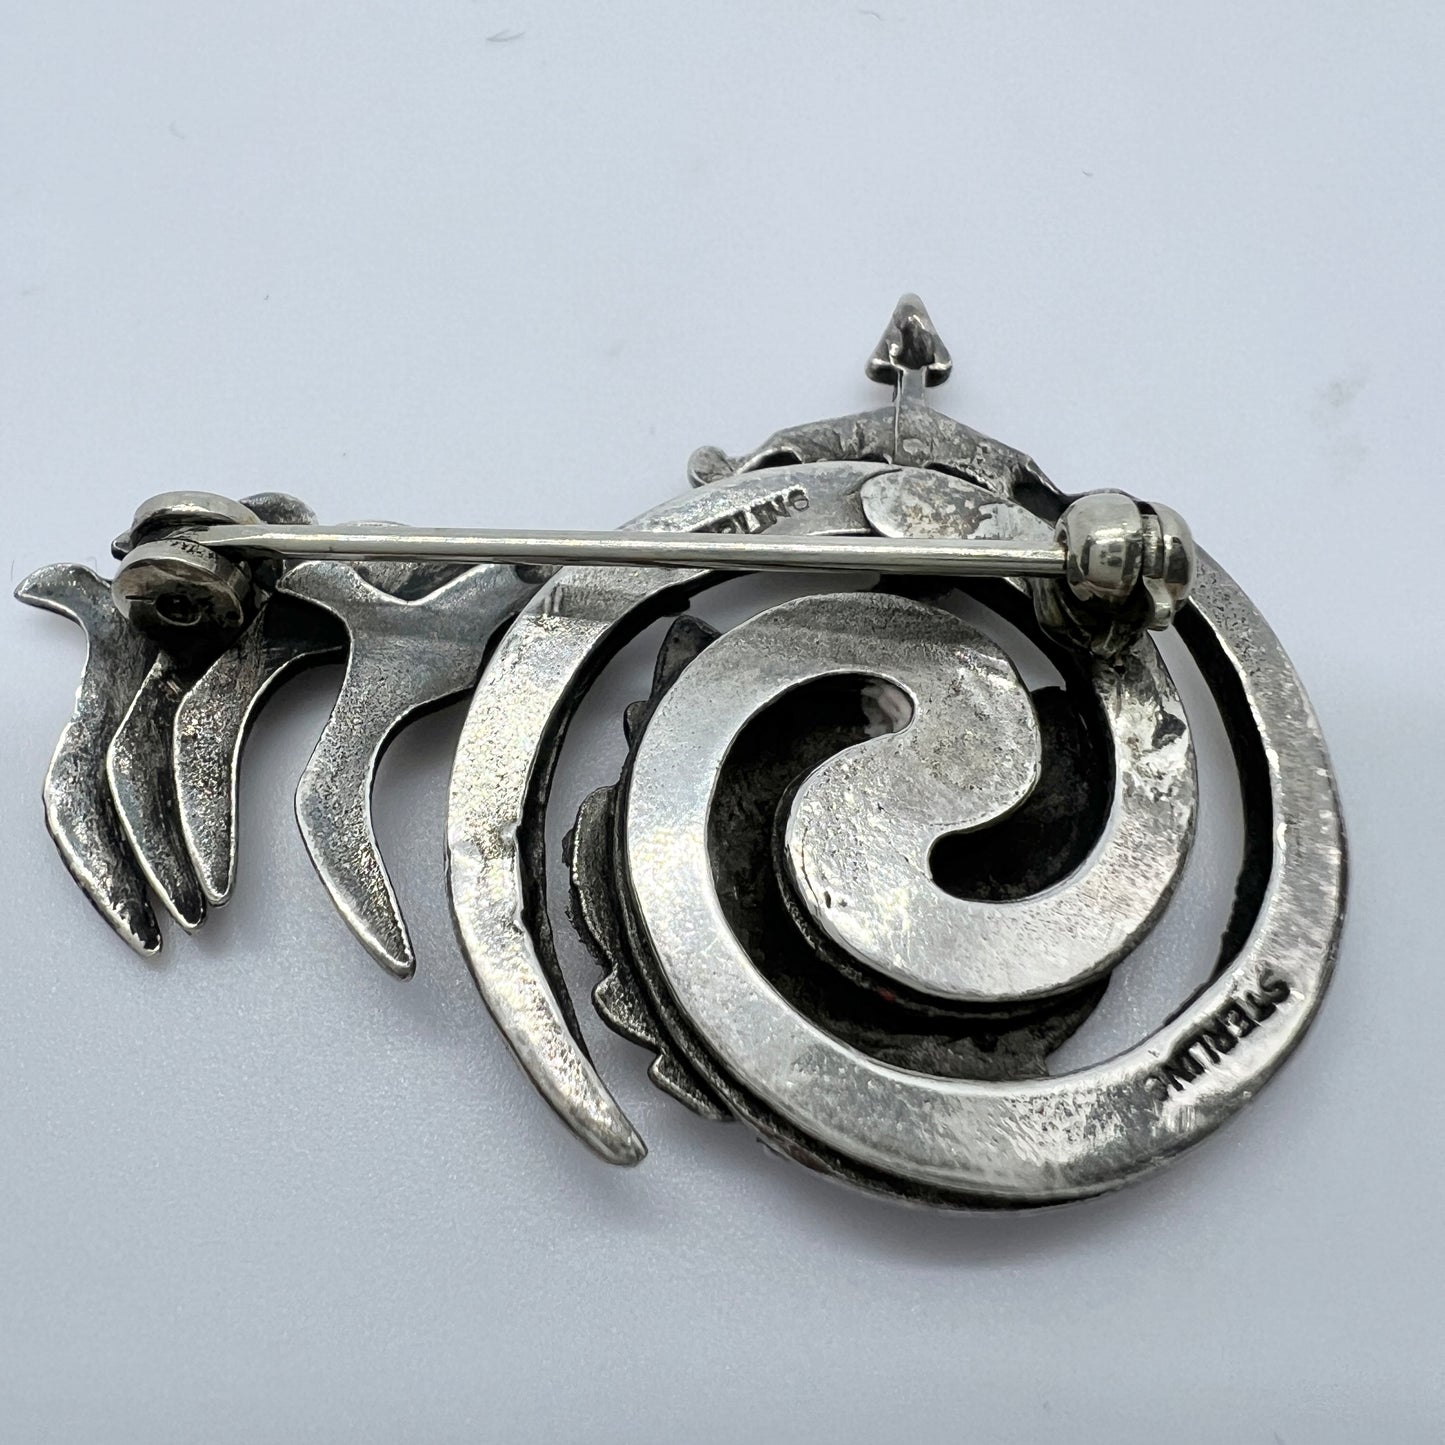 Vintage Sterling Silver Novelty Brooch Pin.